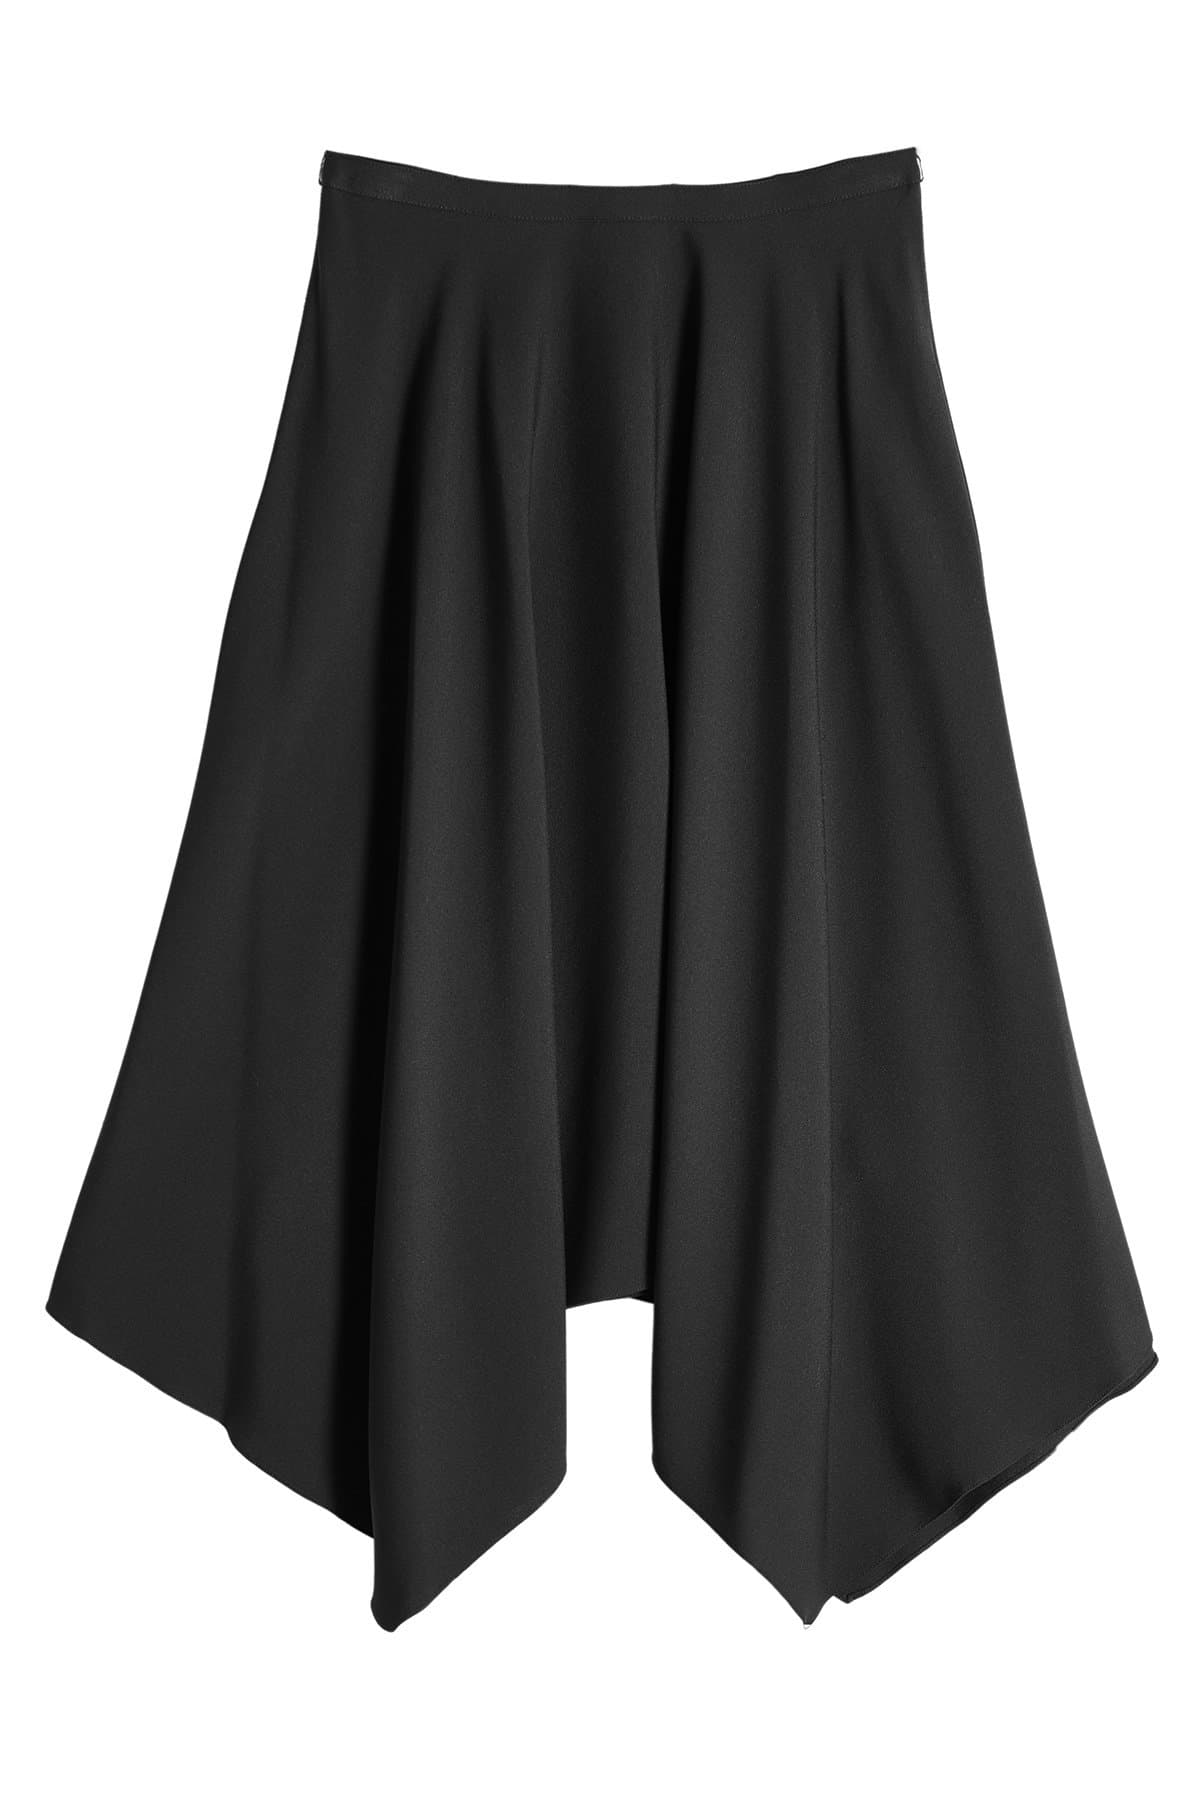 Nina Ricci - Midi Skirt with Handkerchief Hem